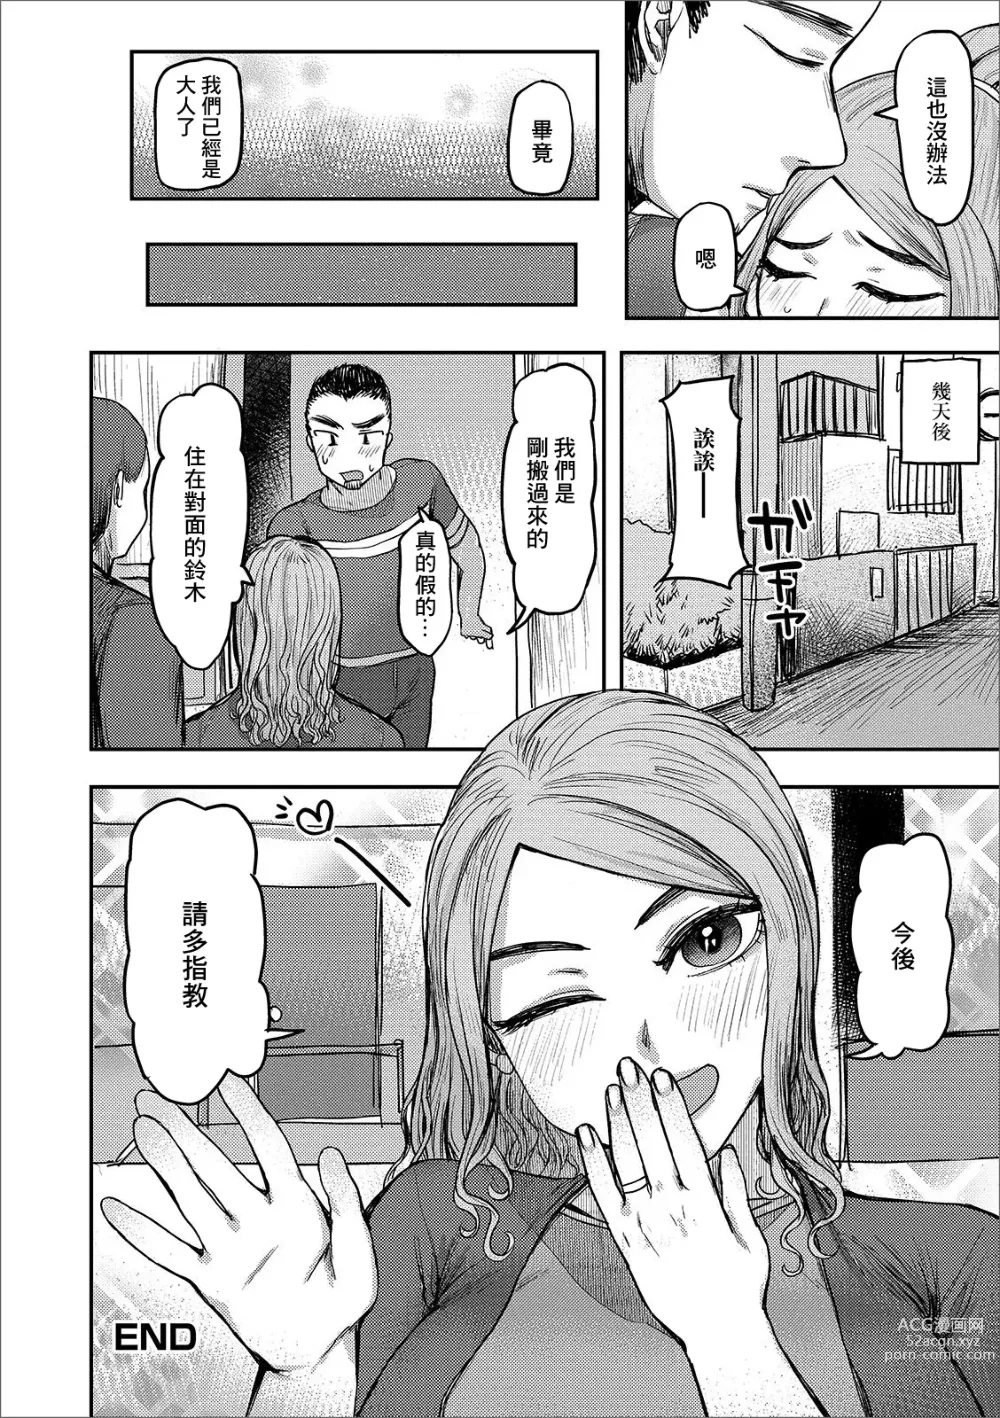 Page 16 of manga Dousoukai de Omochikaeri!